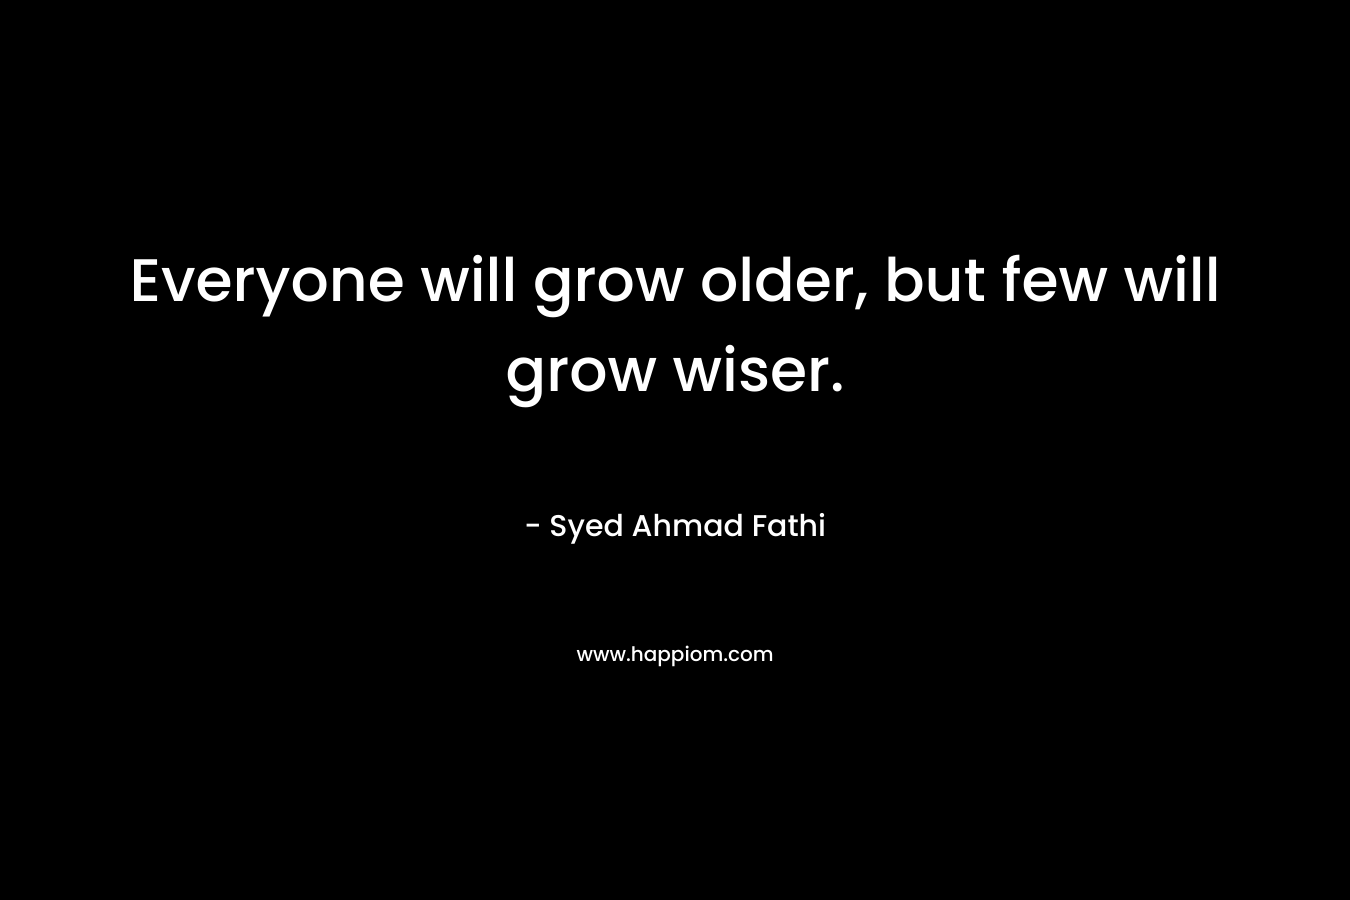 Everyone will grow older, but few will grow wiser.